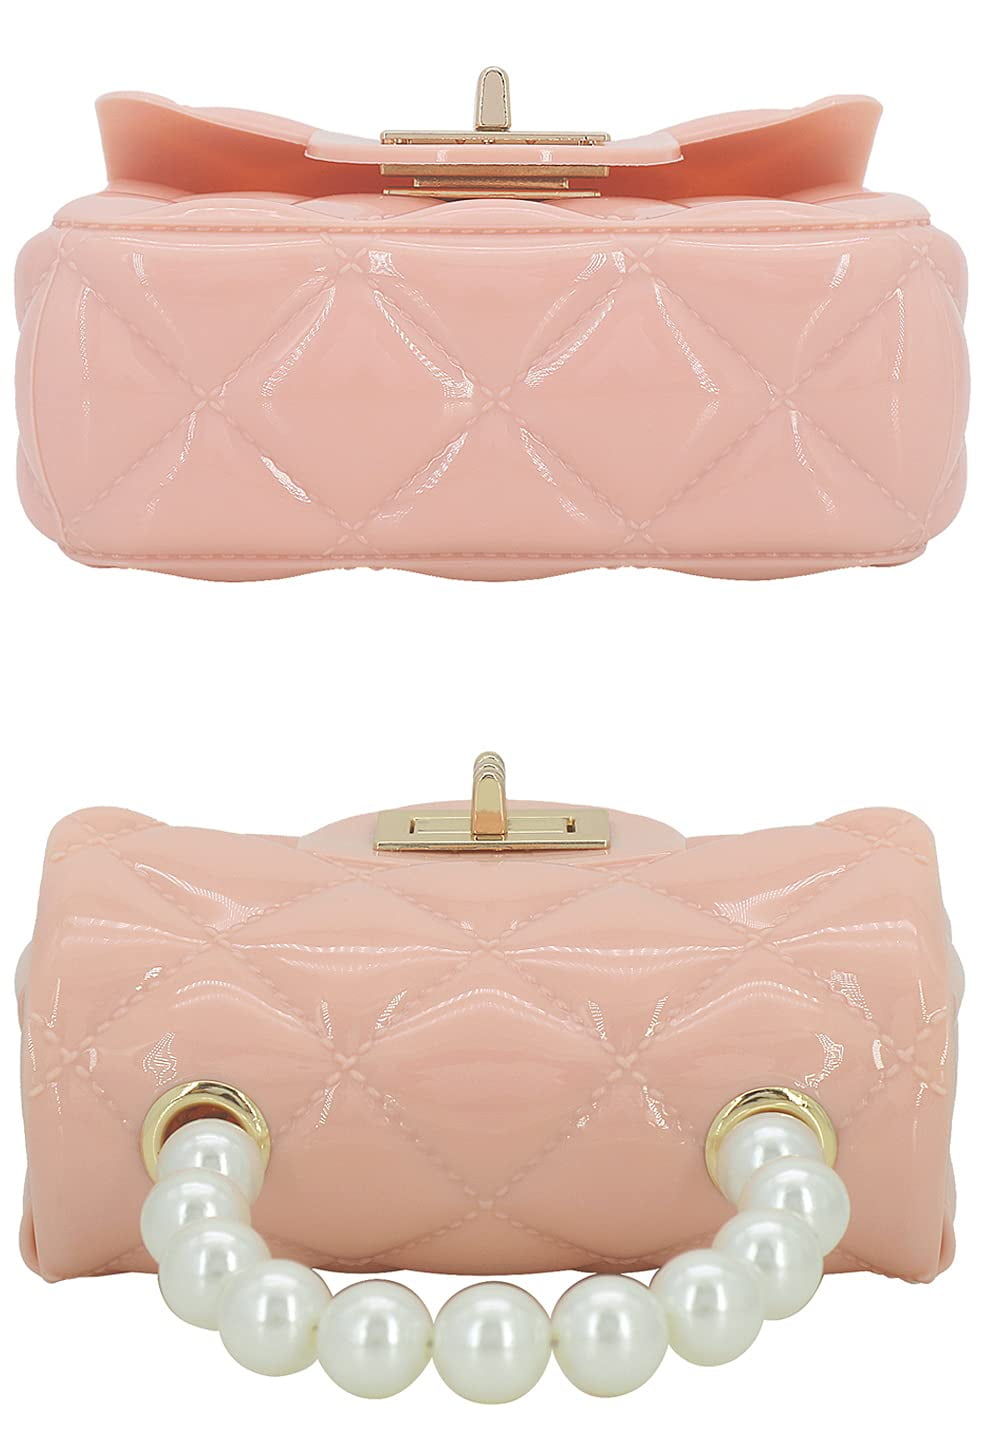 jelly chanel purse